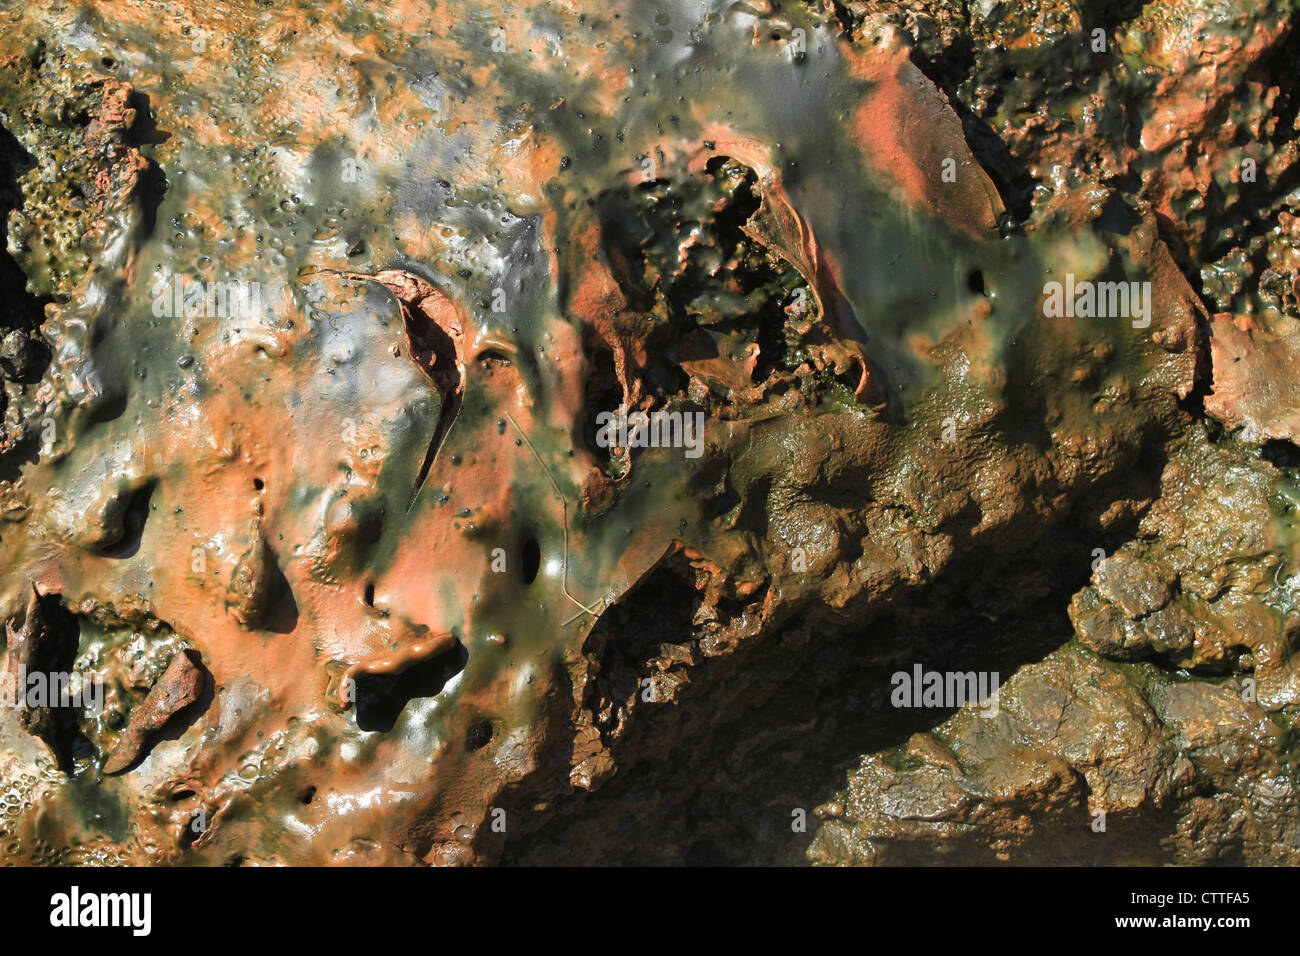 Deildartunguhver, hot spring, Iceland close up of iron oxide deposit Stock Photo